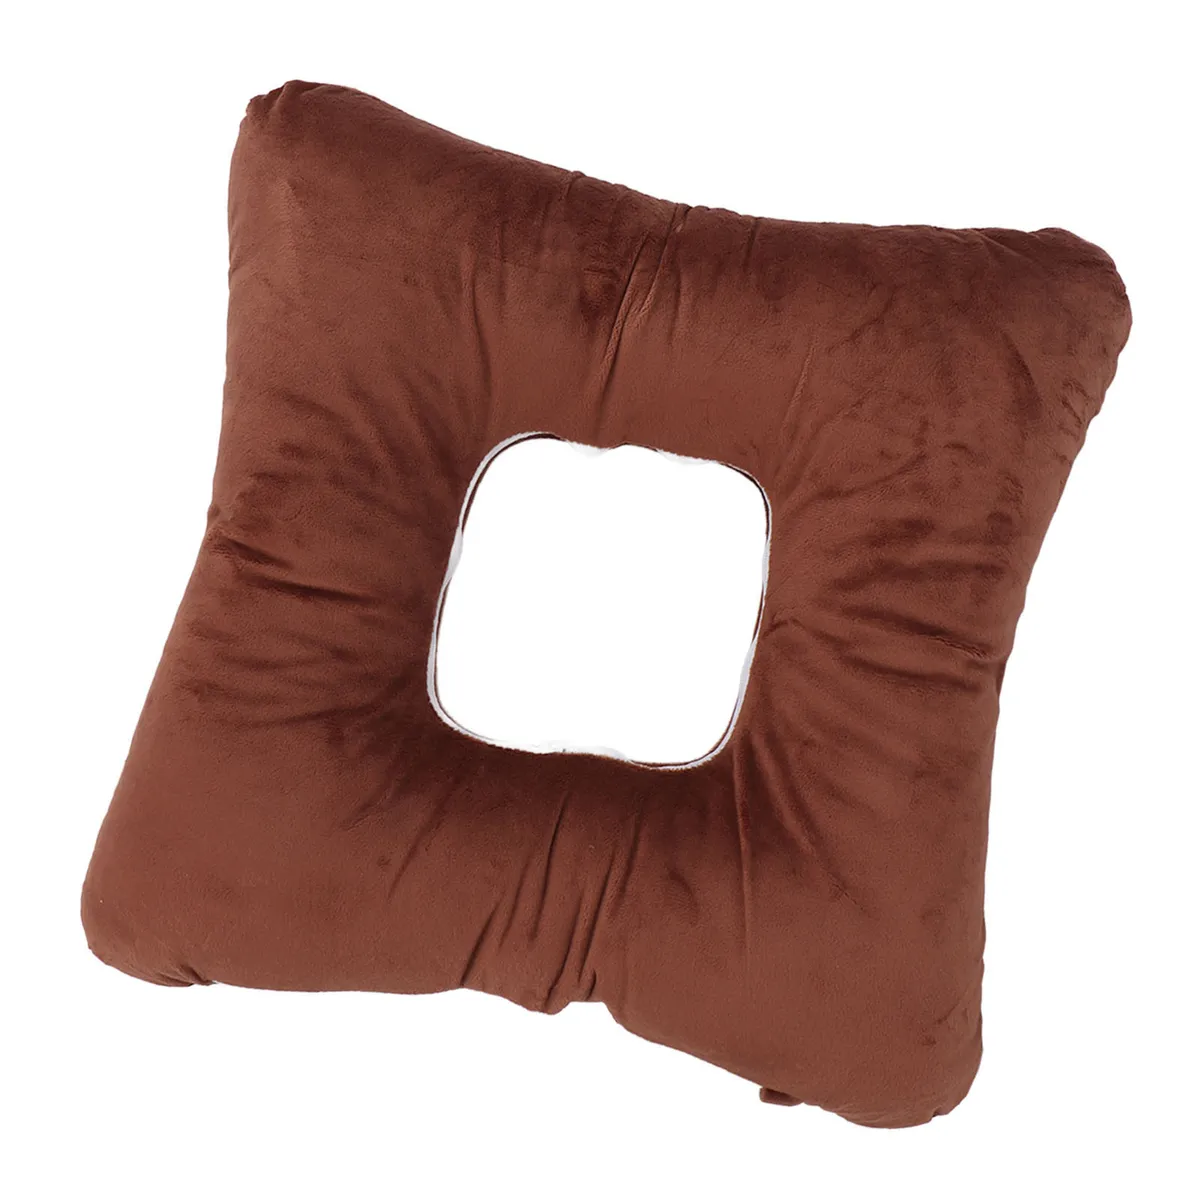 Butt Bedsore Cushion Cotton Filling Hemmoroid Pillow Cushion Remove